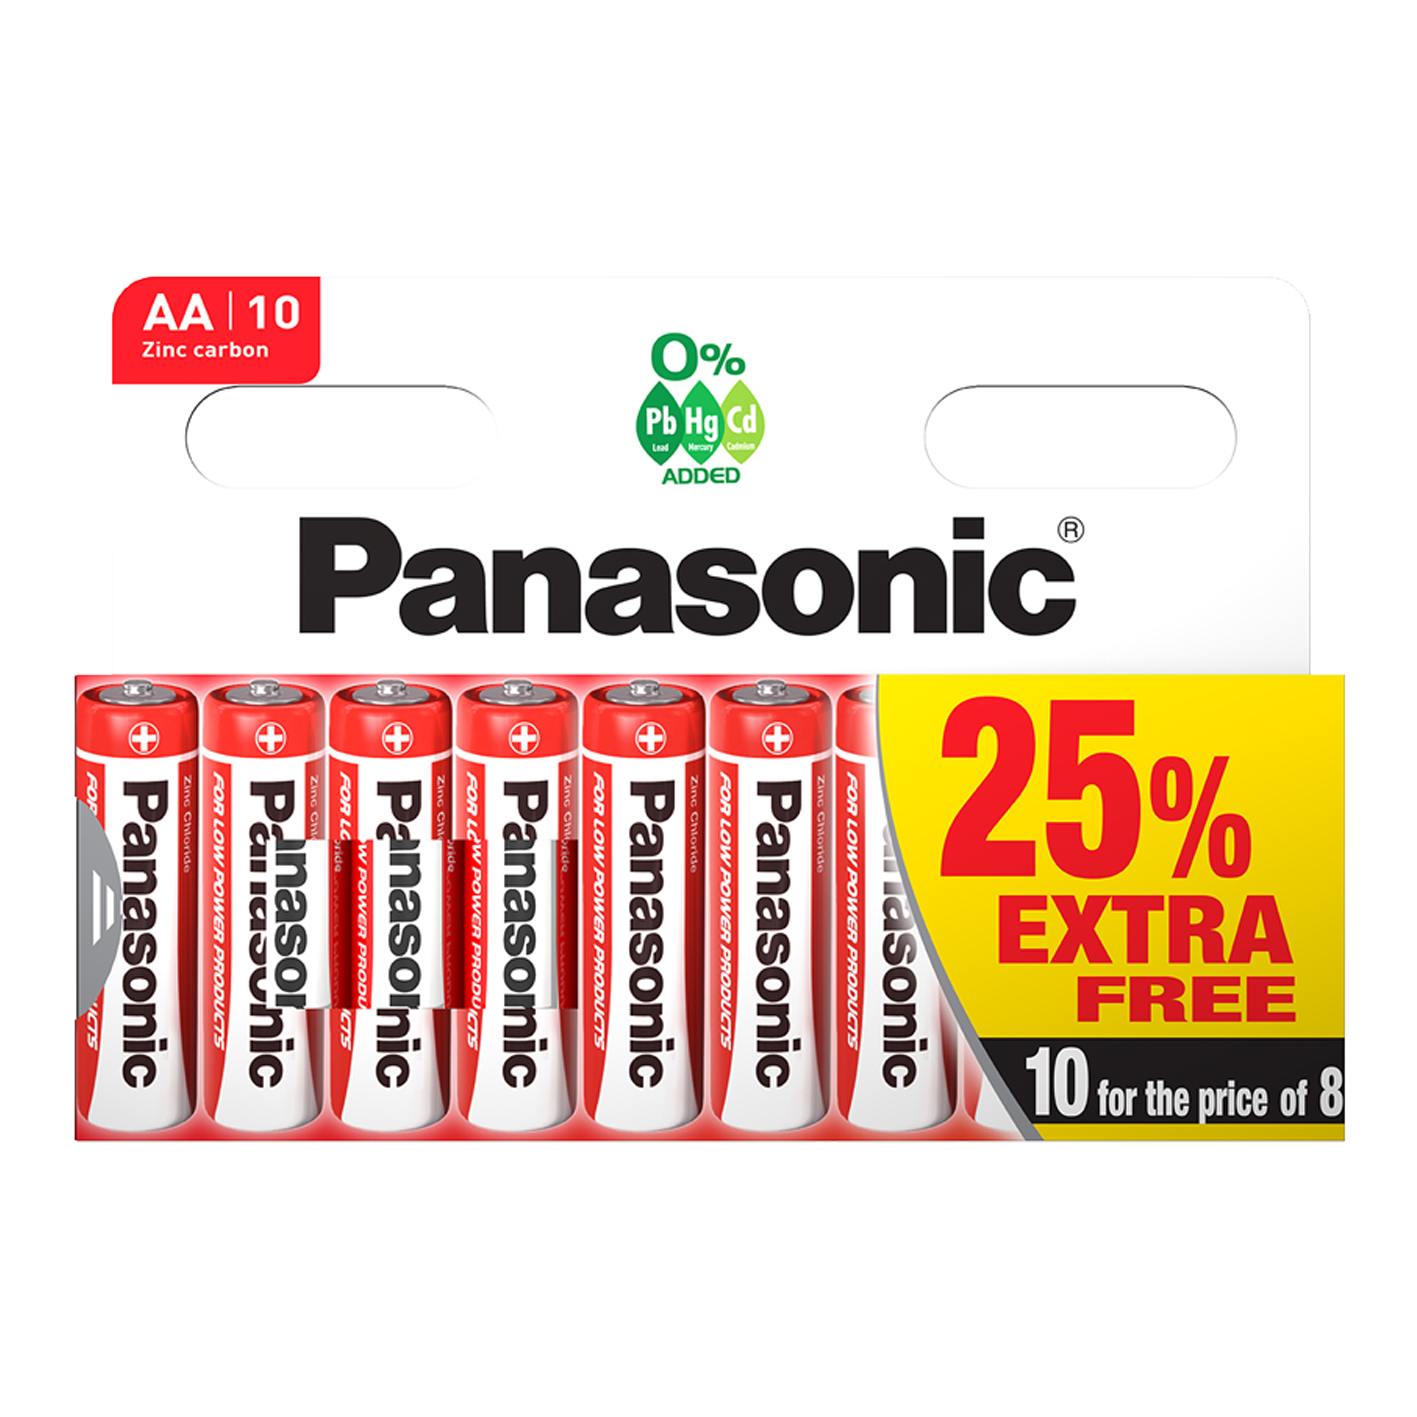 Panasonic AA Zinc, Pack of 10